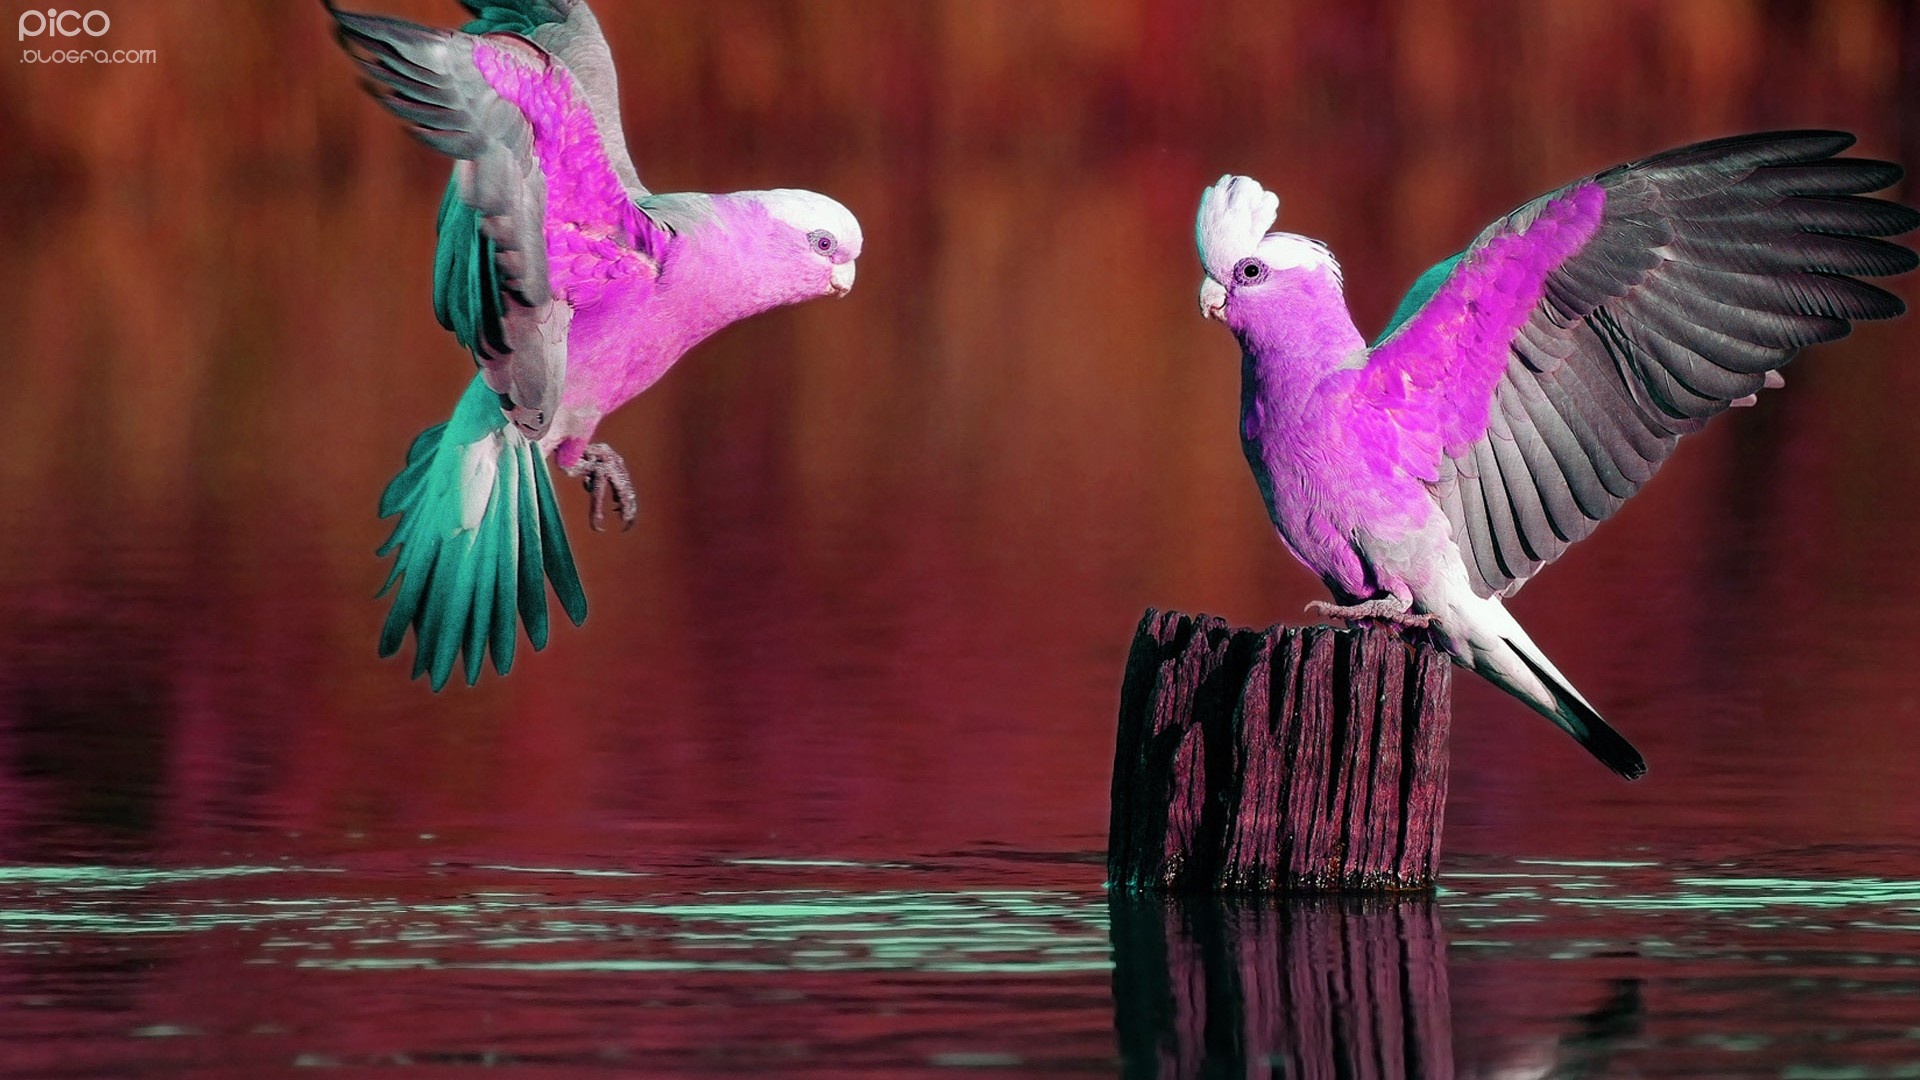 lijw_pico-beautiful-parrots.jpg